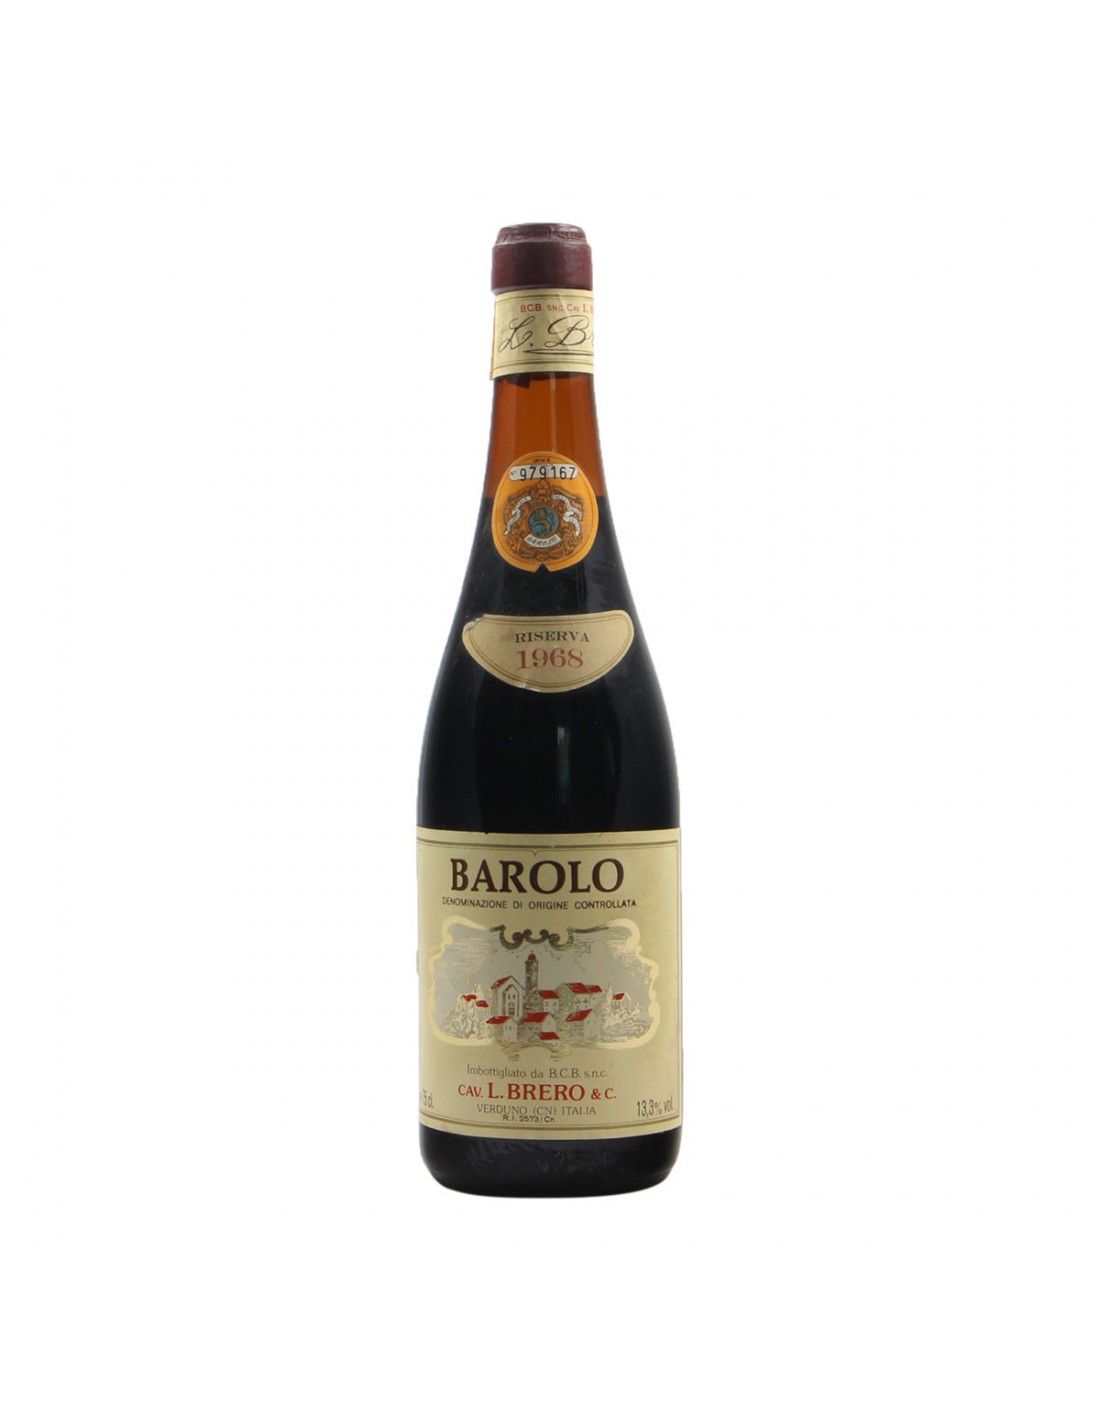 BAROLO 1968 BRERO Grandi Bottiglie